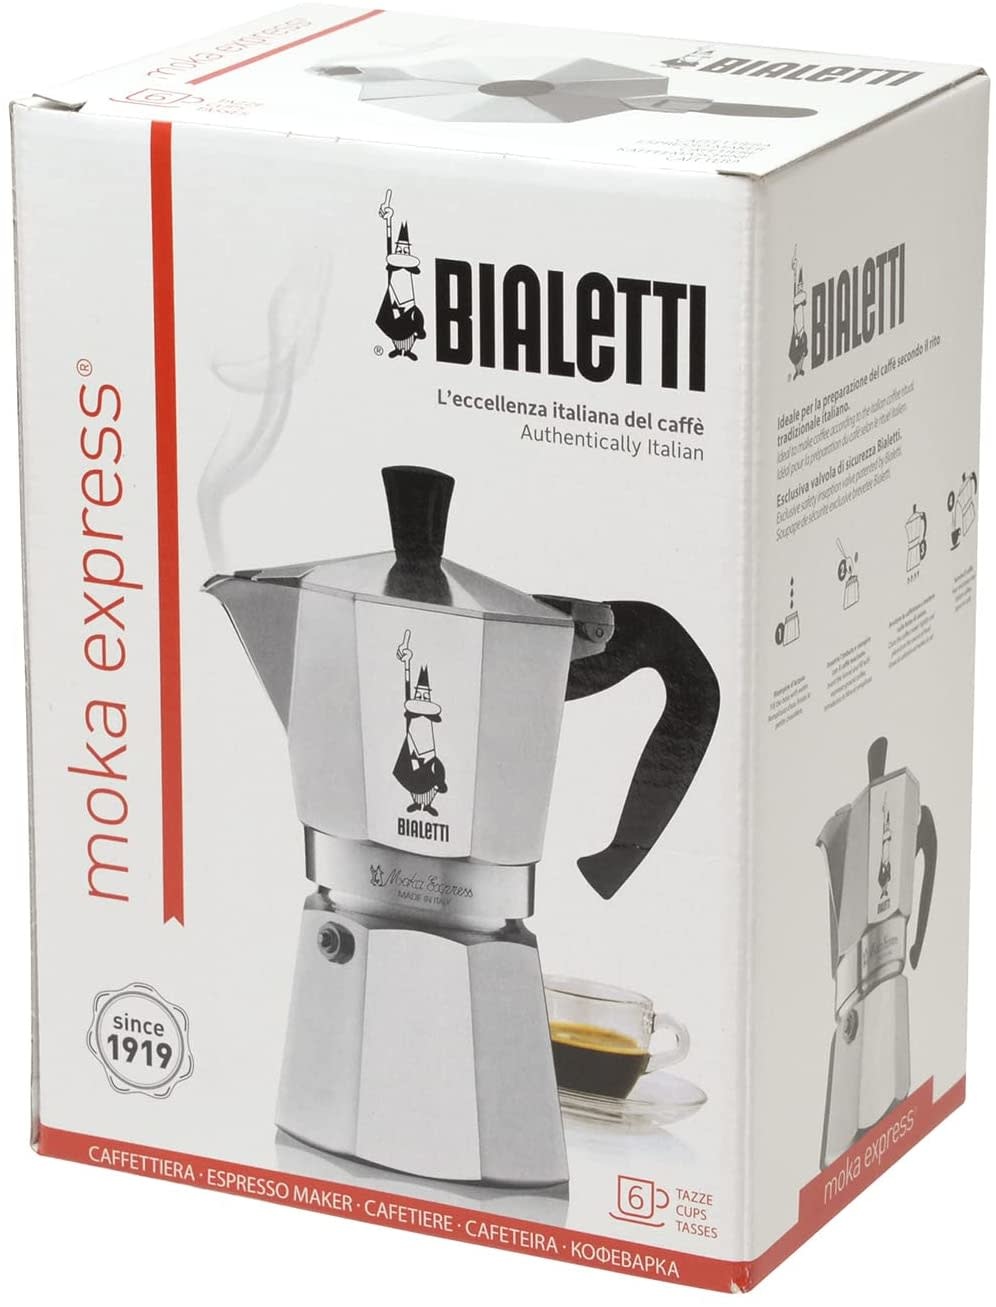 Bialetti Moka Express 6 cups - Wide range of Bialetti Products.